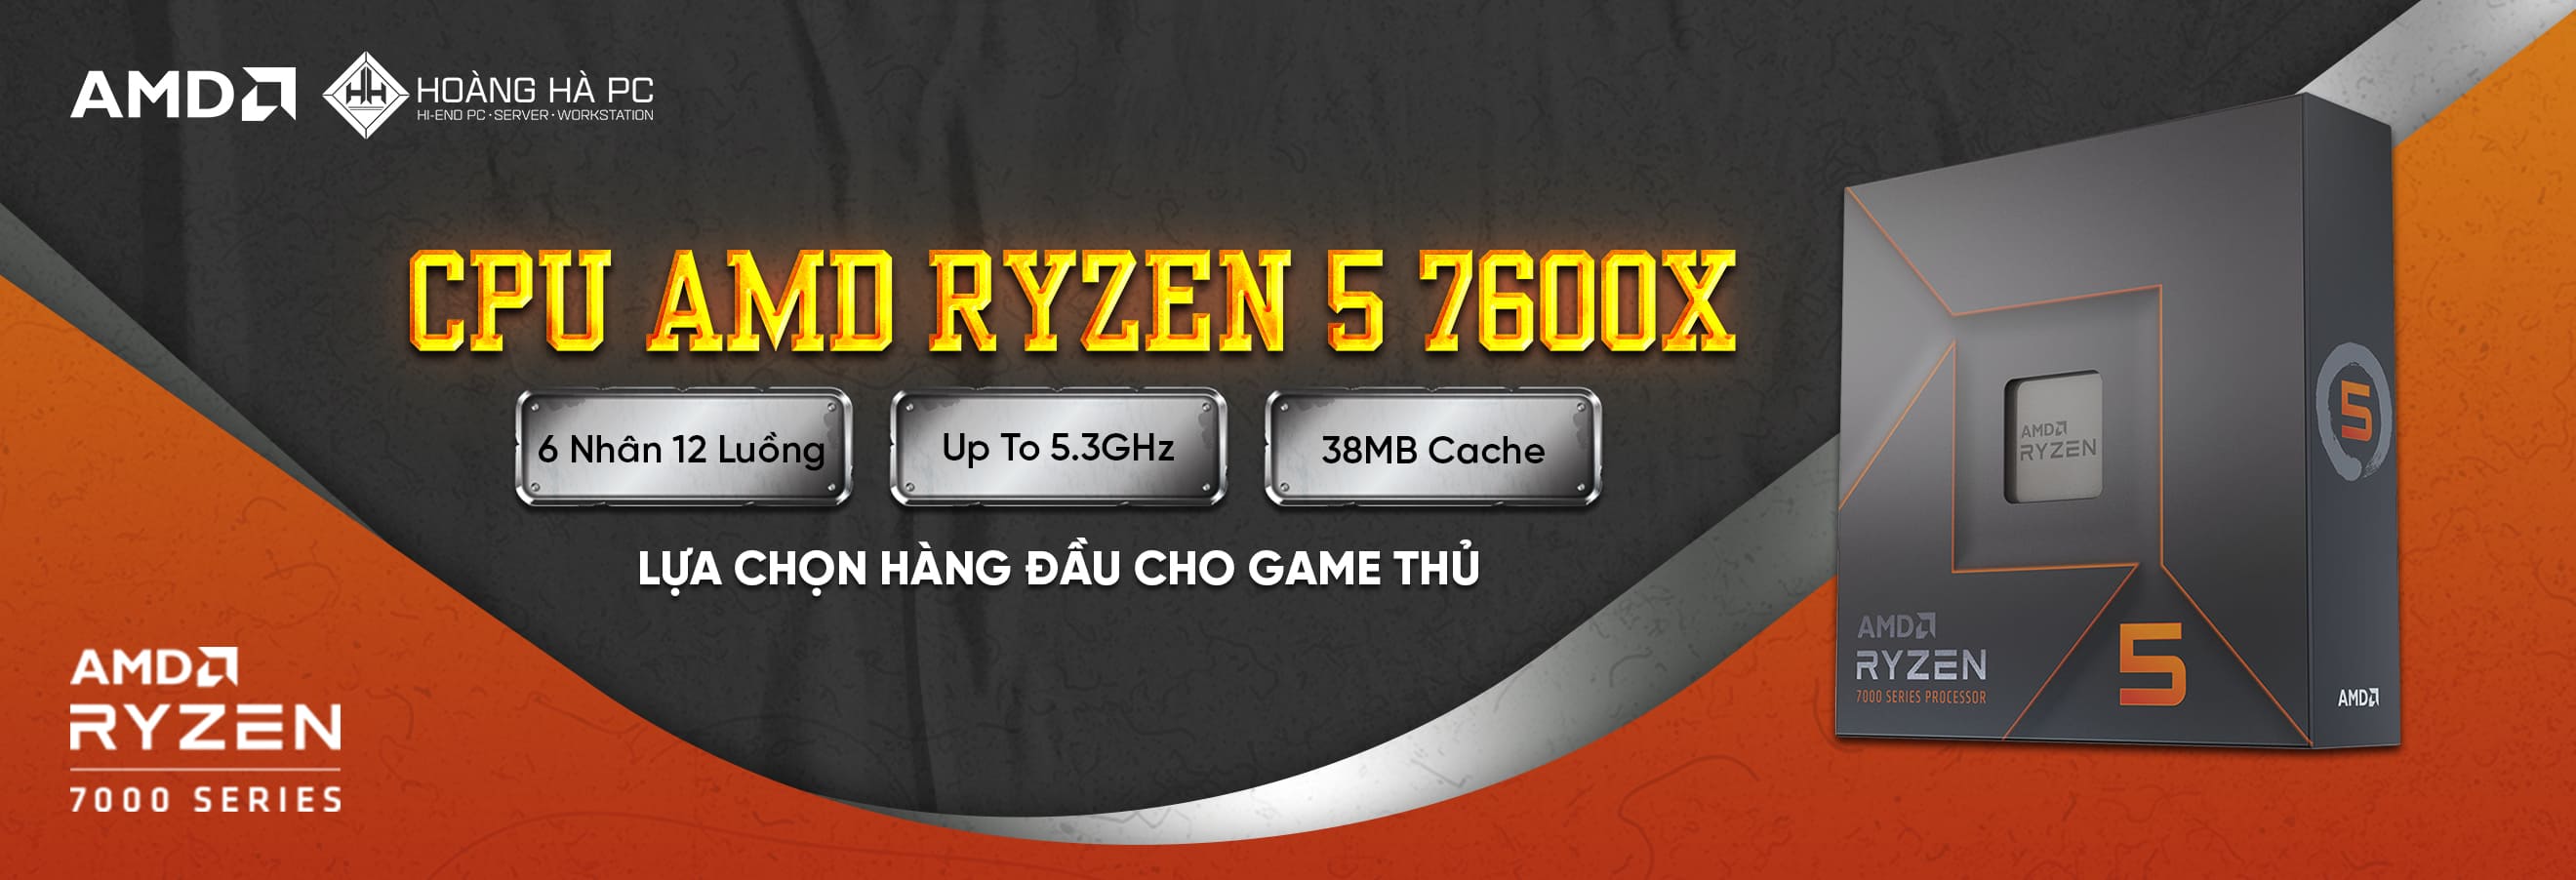 AMD ryzen 5 7600x